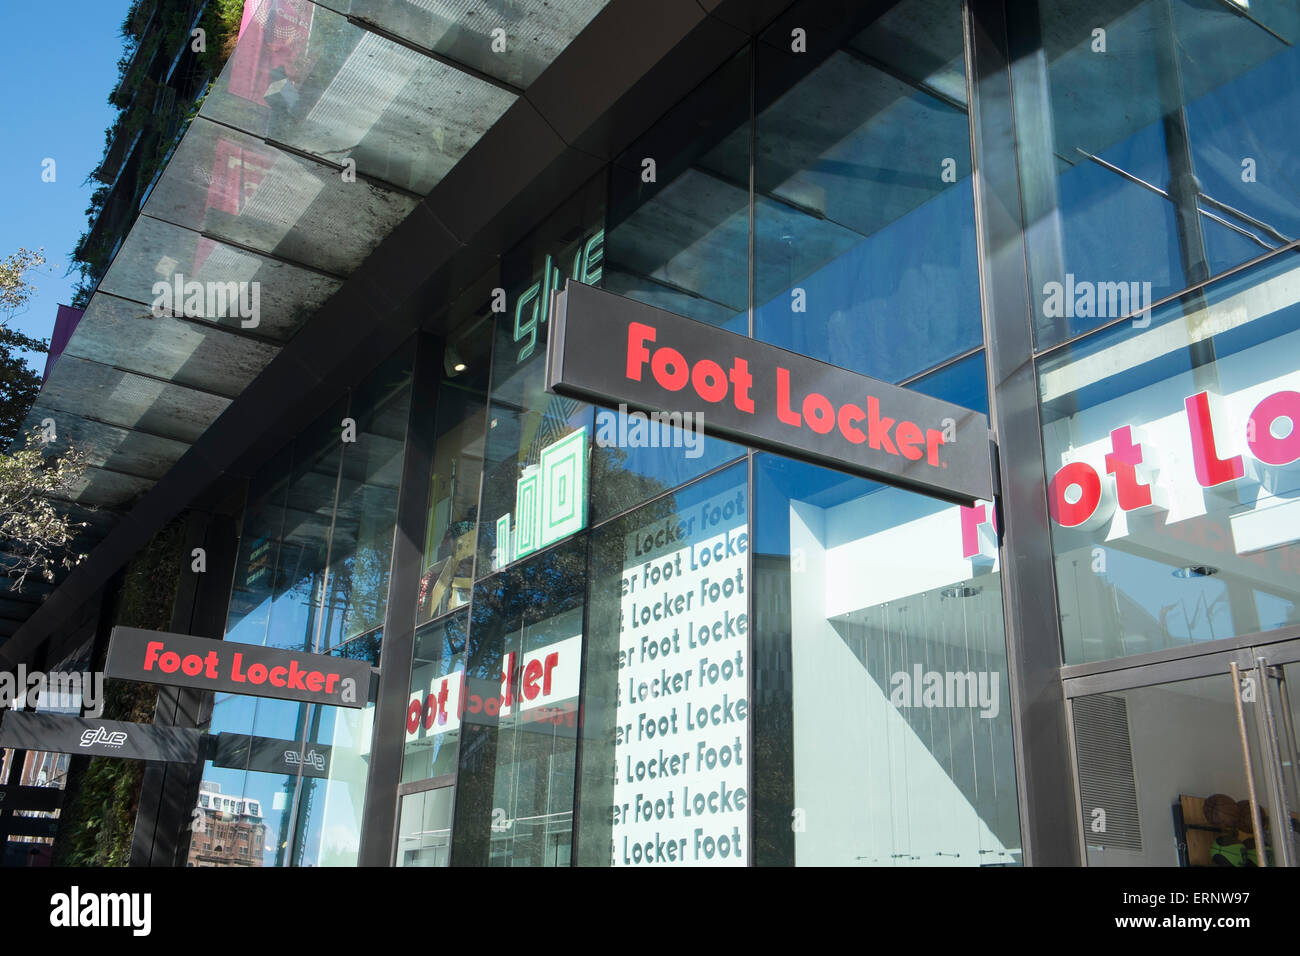 Foot locker store shop in chippendale,Sydney,Australia Stock Photo